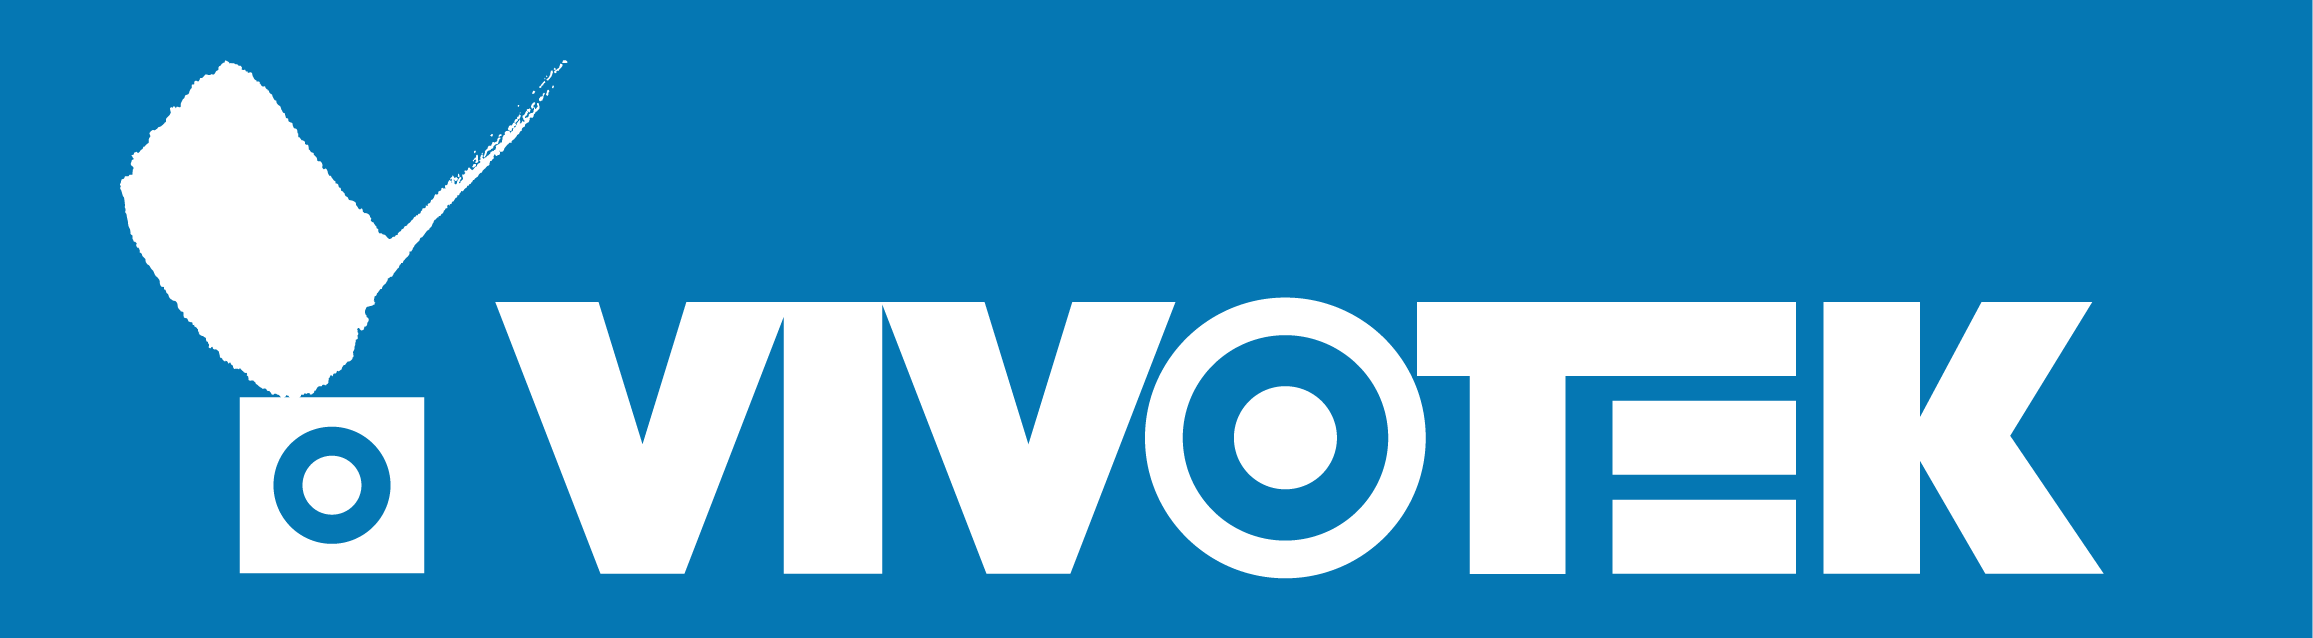 VIVOTEK Logo - Buy VIVOTEK brand products from ₪0 in online shop TopMarket in Israel